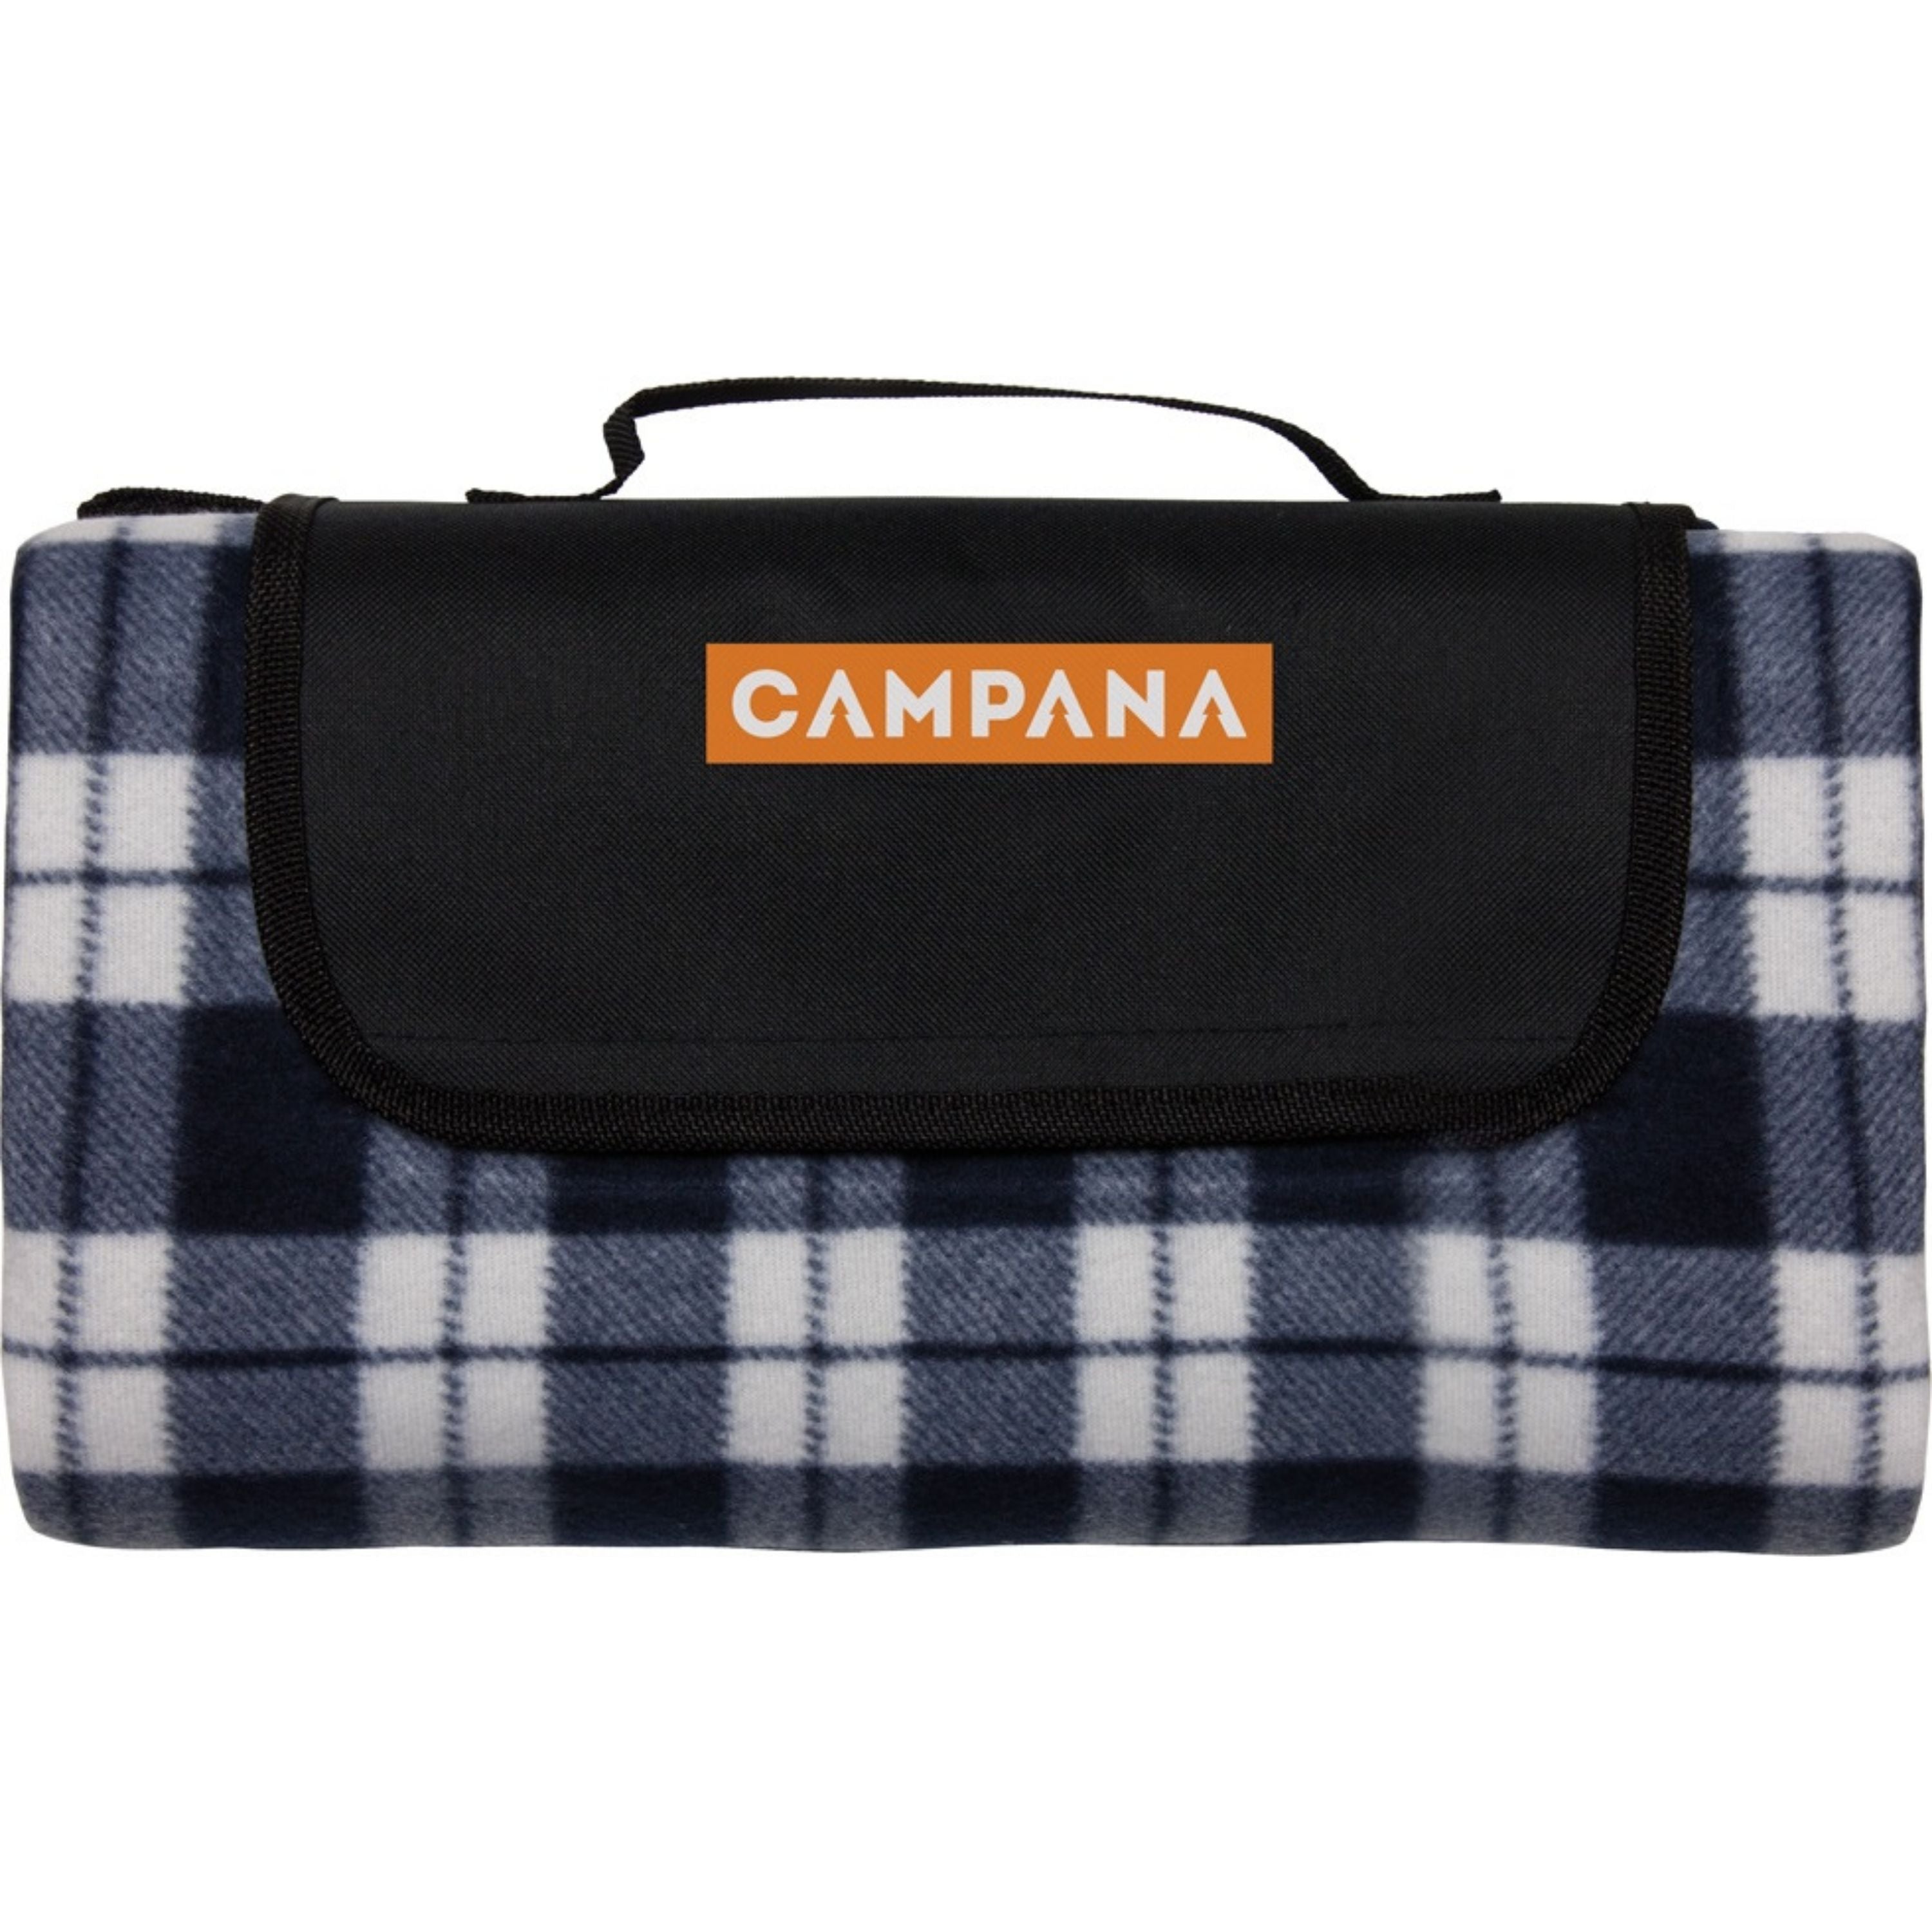 Couverture de pique-nique “Campana”||“Campana” picnic blanket